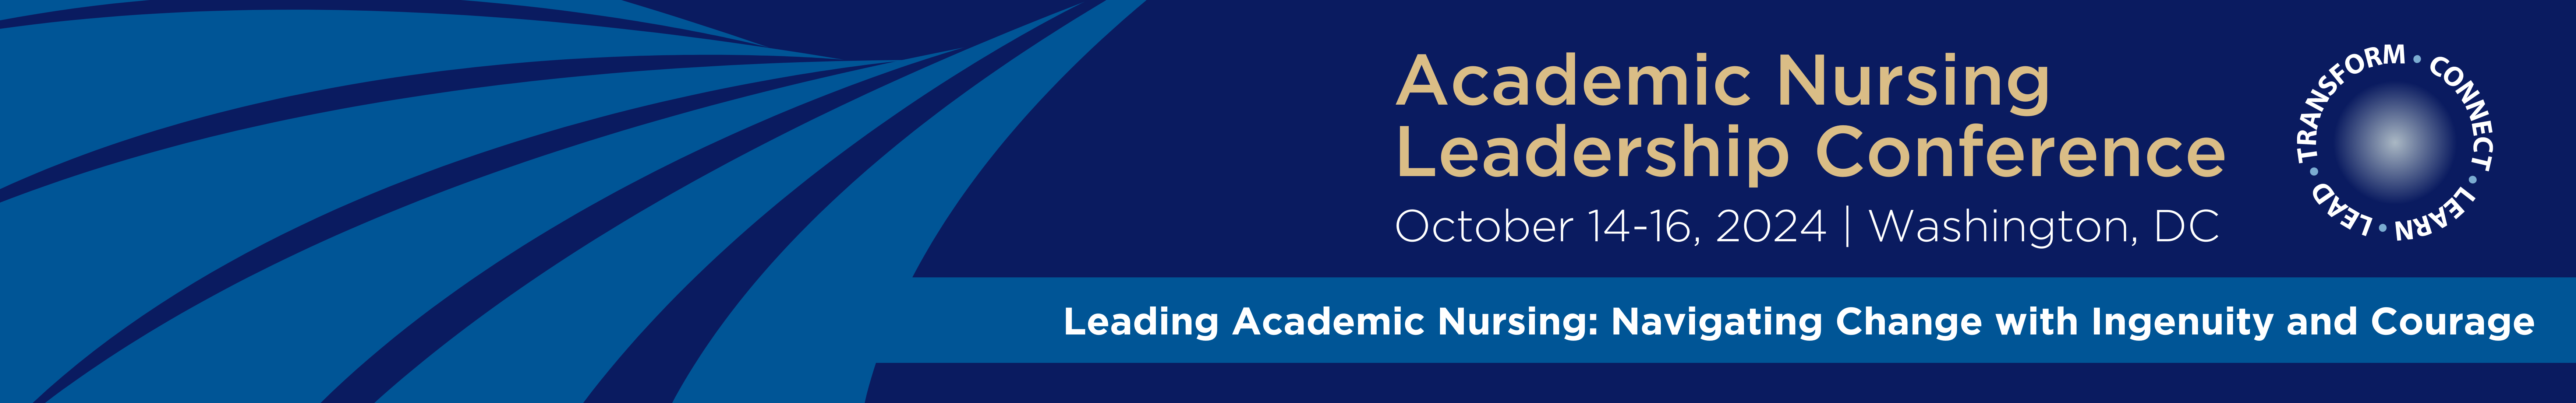 academic nursing leadership conference